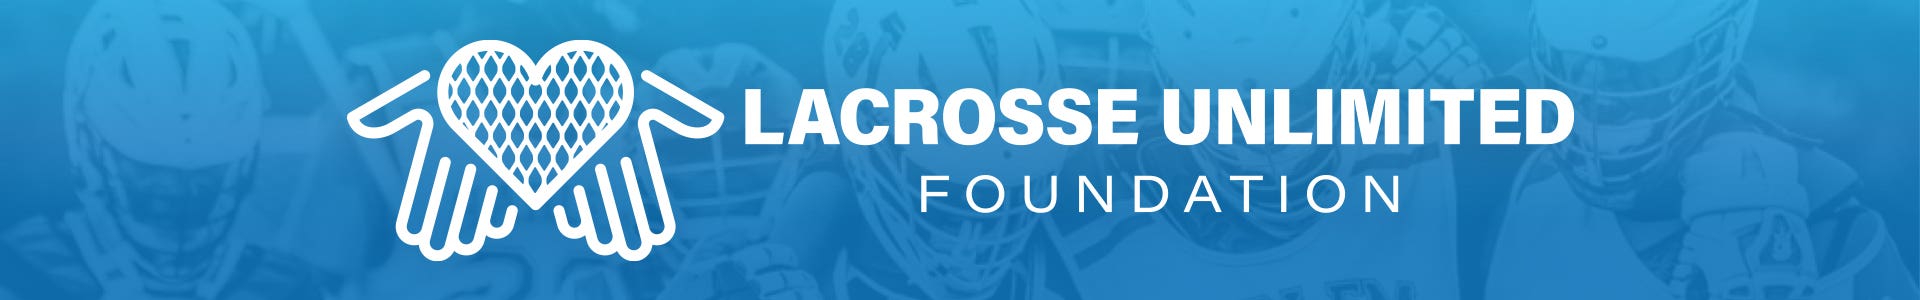 Lacrosse Unlimited Foundation